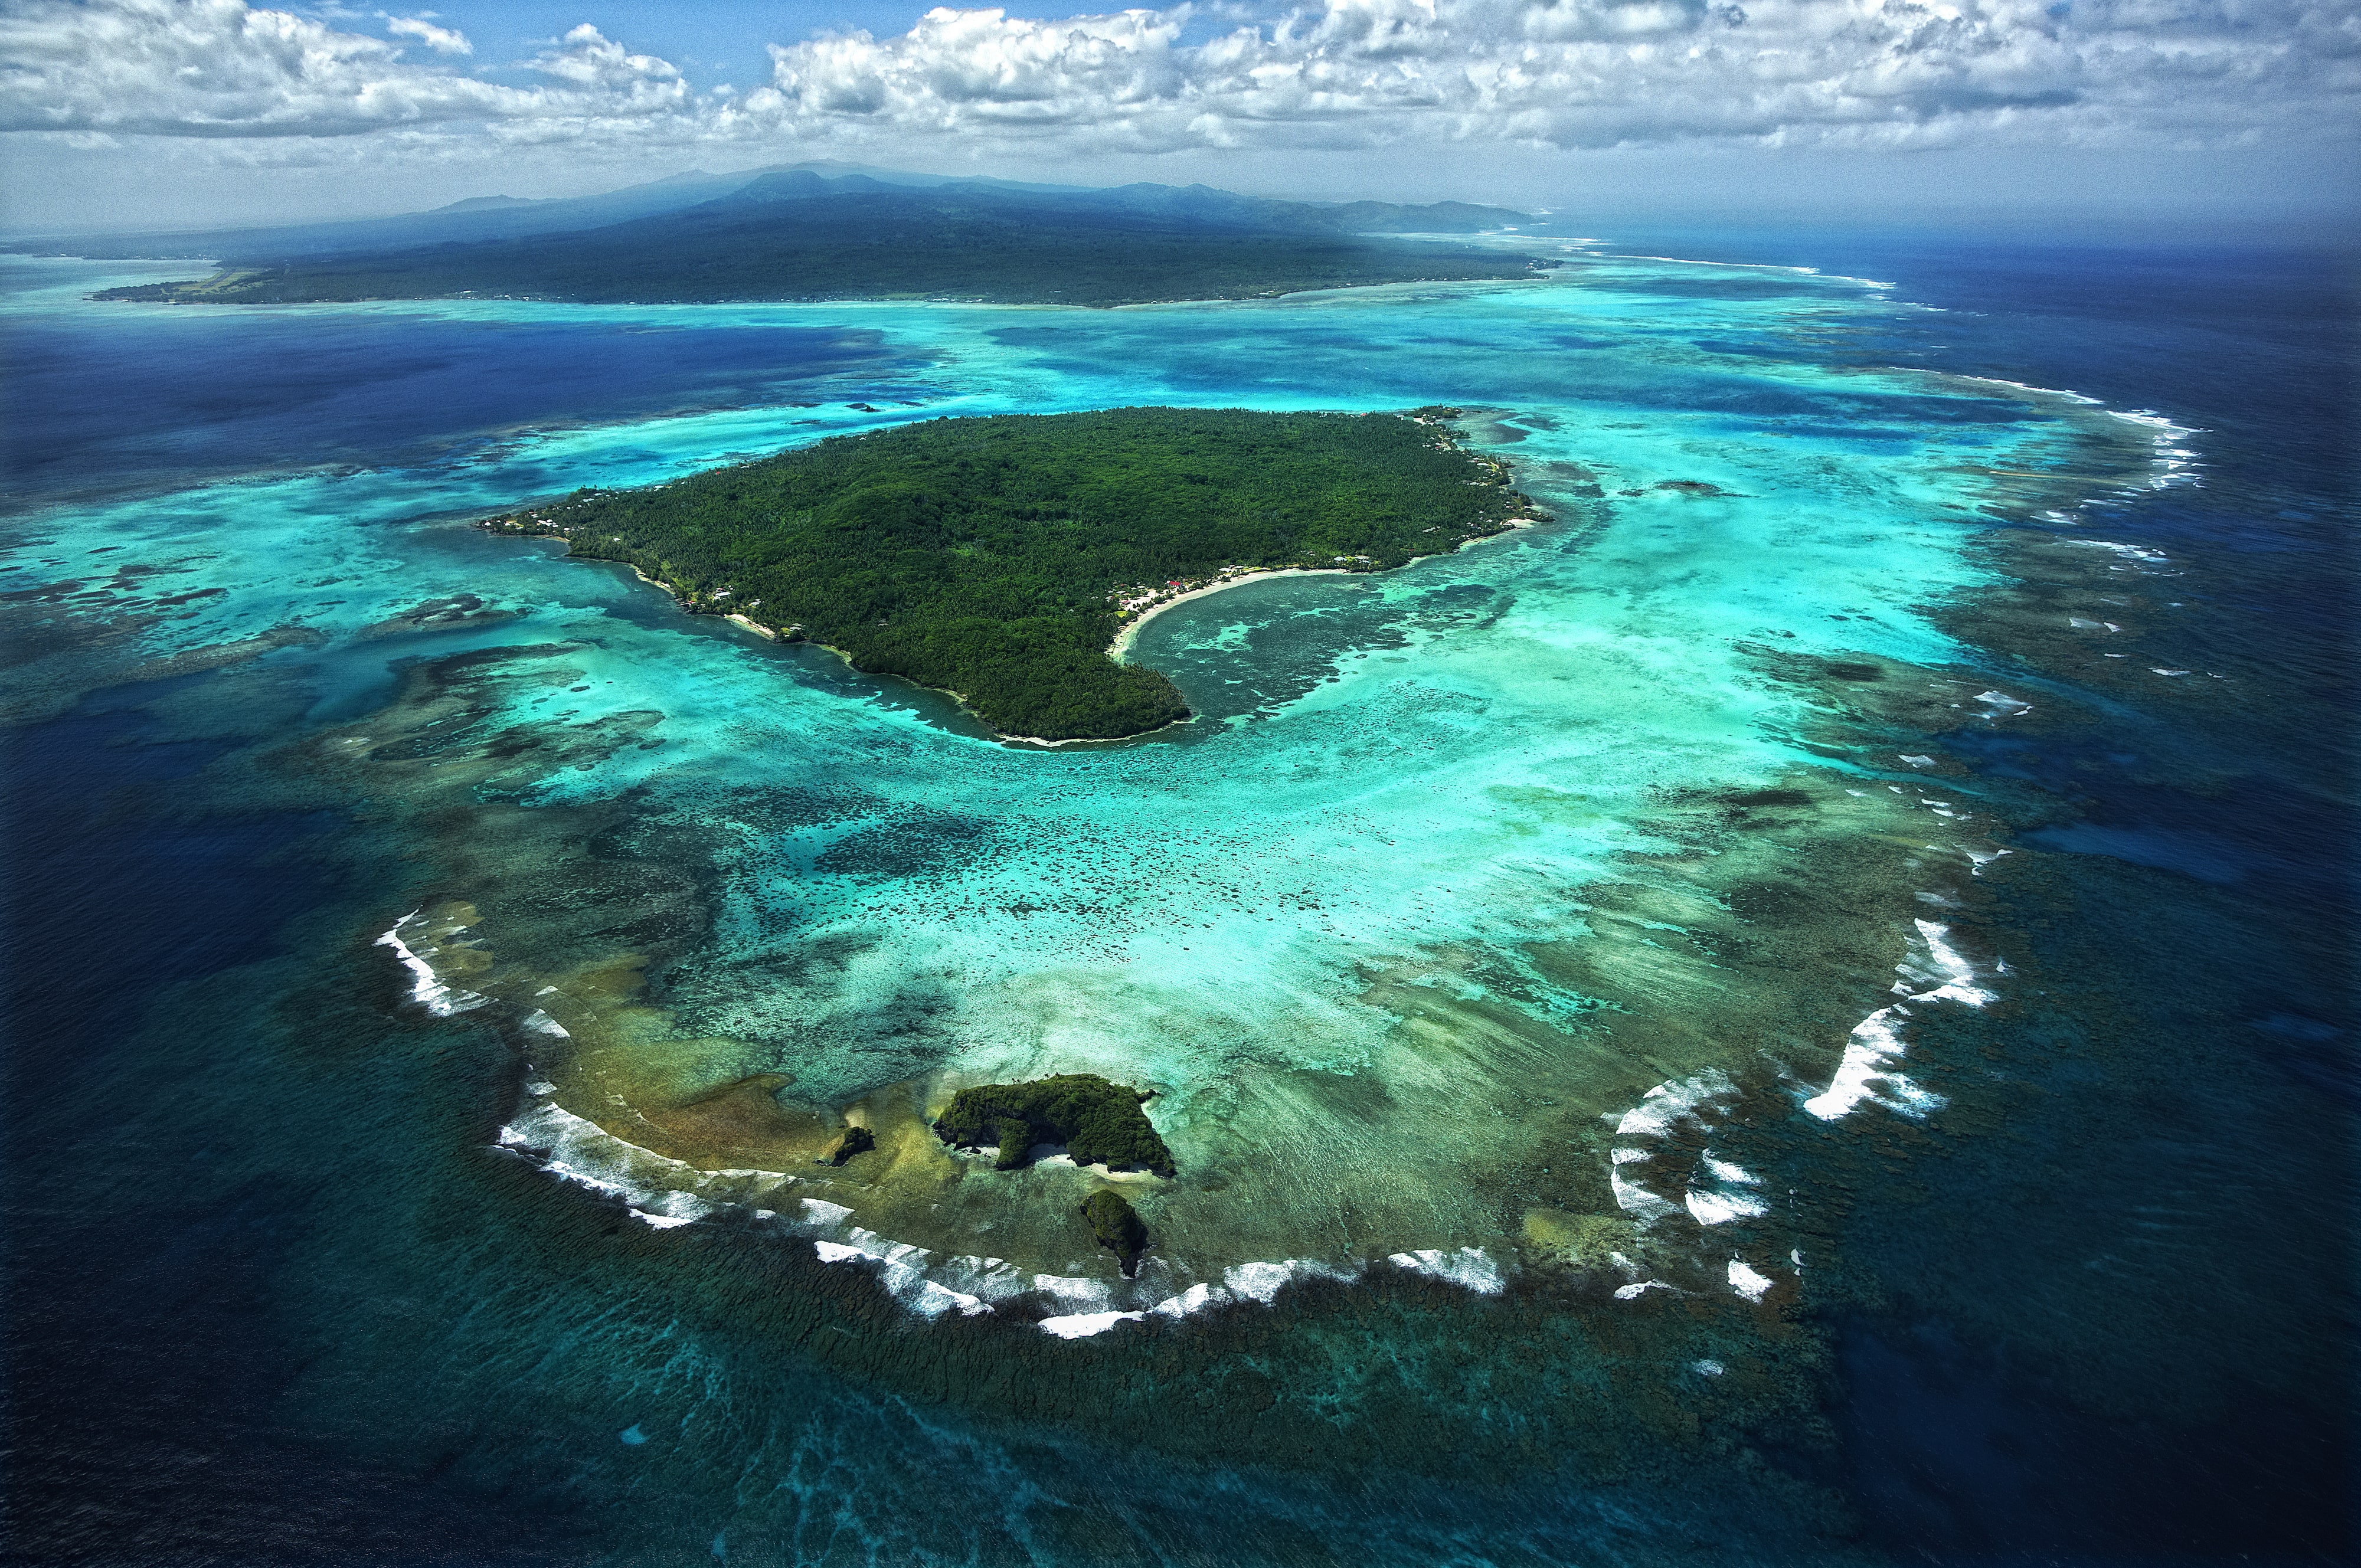 Форма тихого океана. Уполу Самоа. Самоа остров. Архипелаг Самоа, остров Уполу. Тихий океан Самоа.